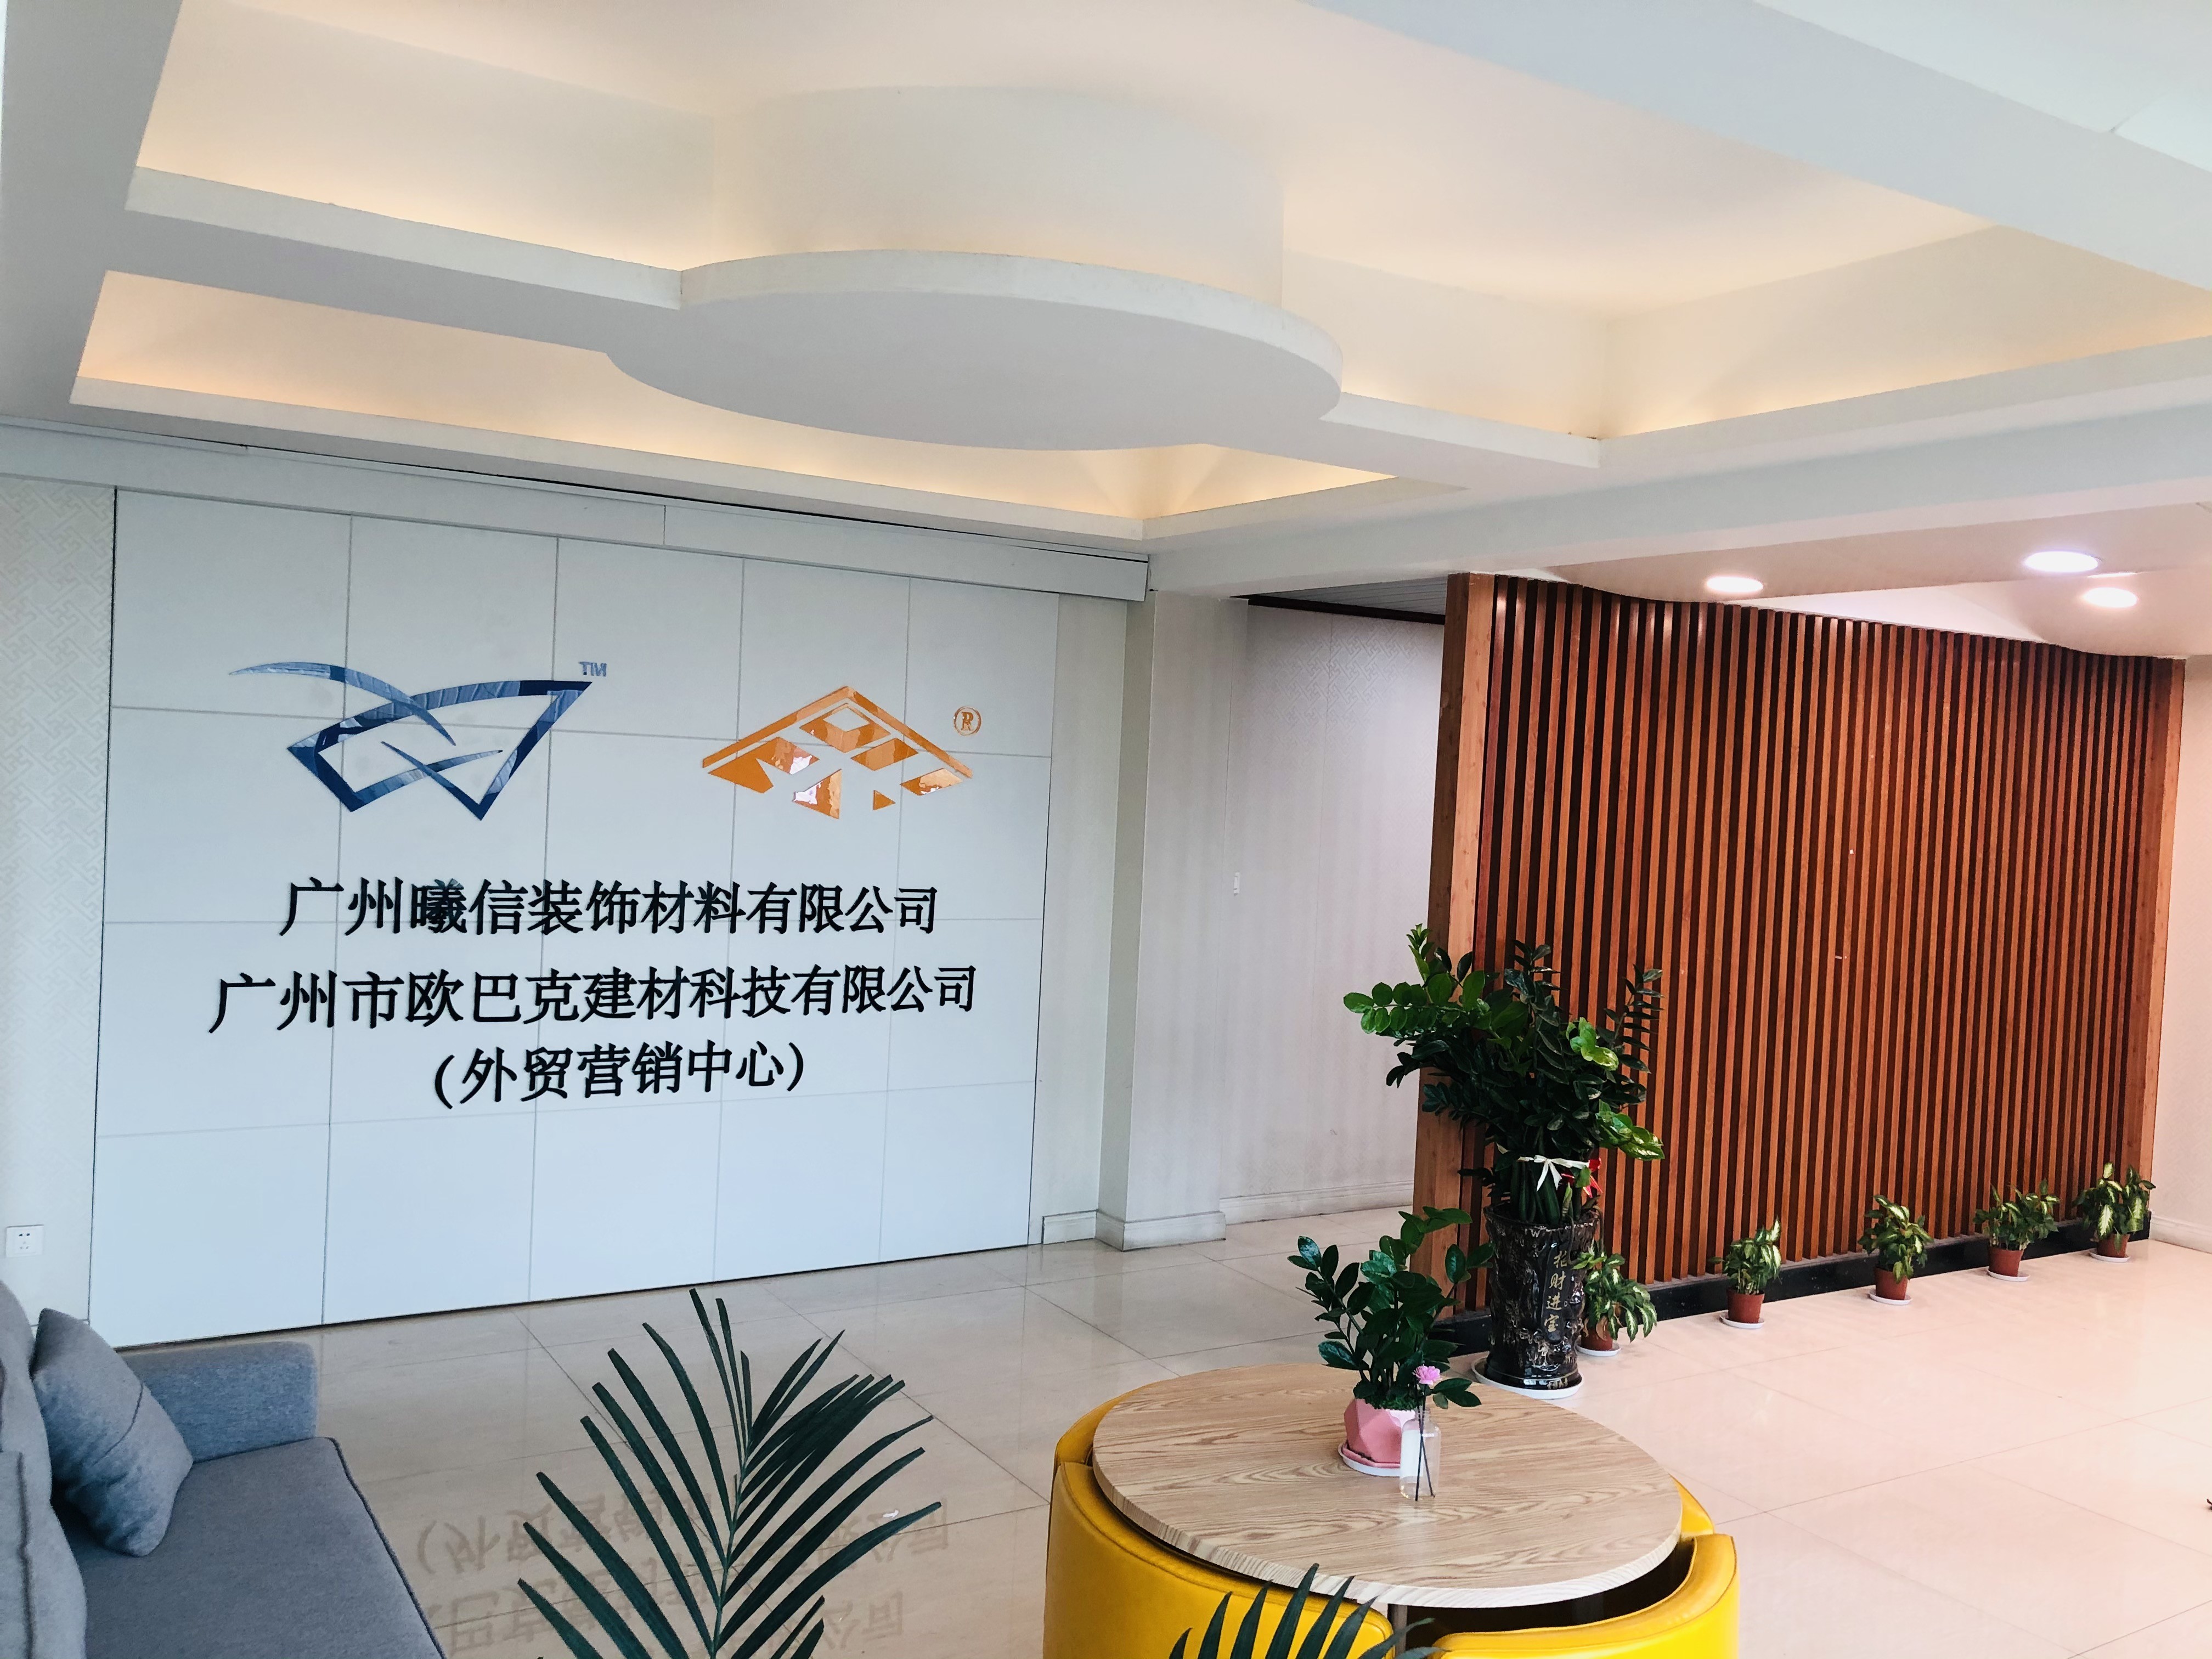 Çin Guangzhou Season Decoration Materials Co., Ltd. şirket Profili